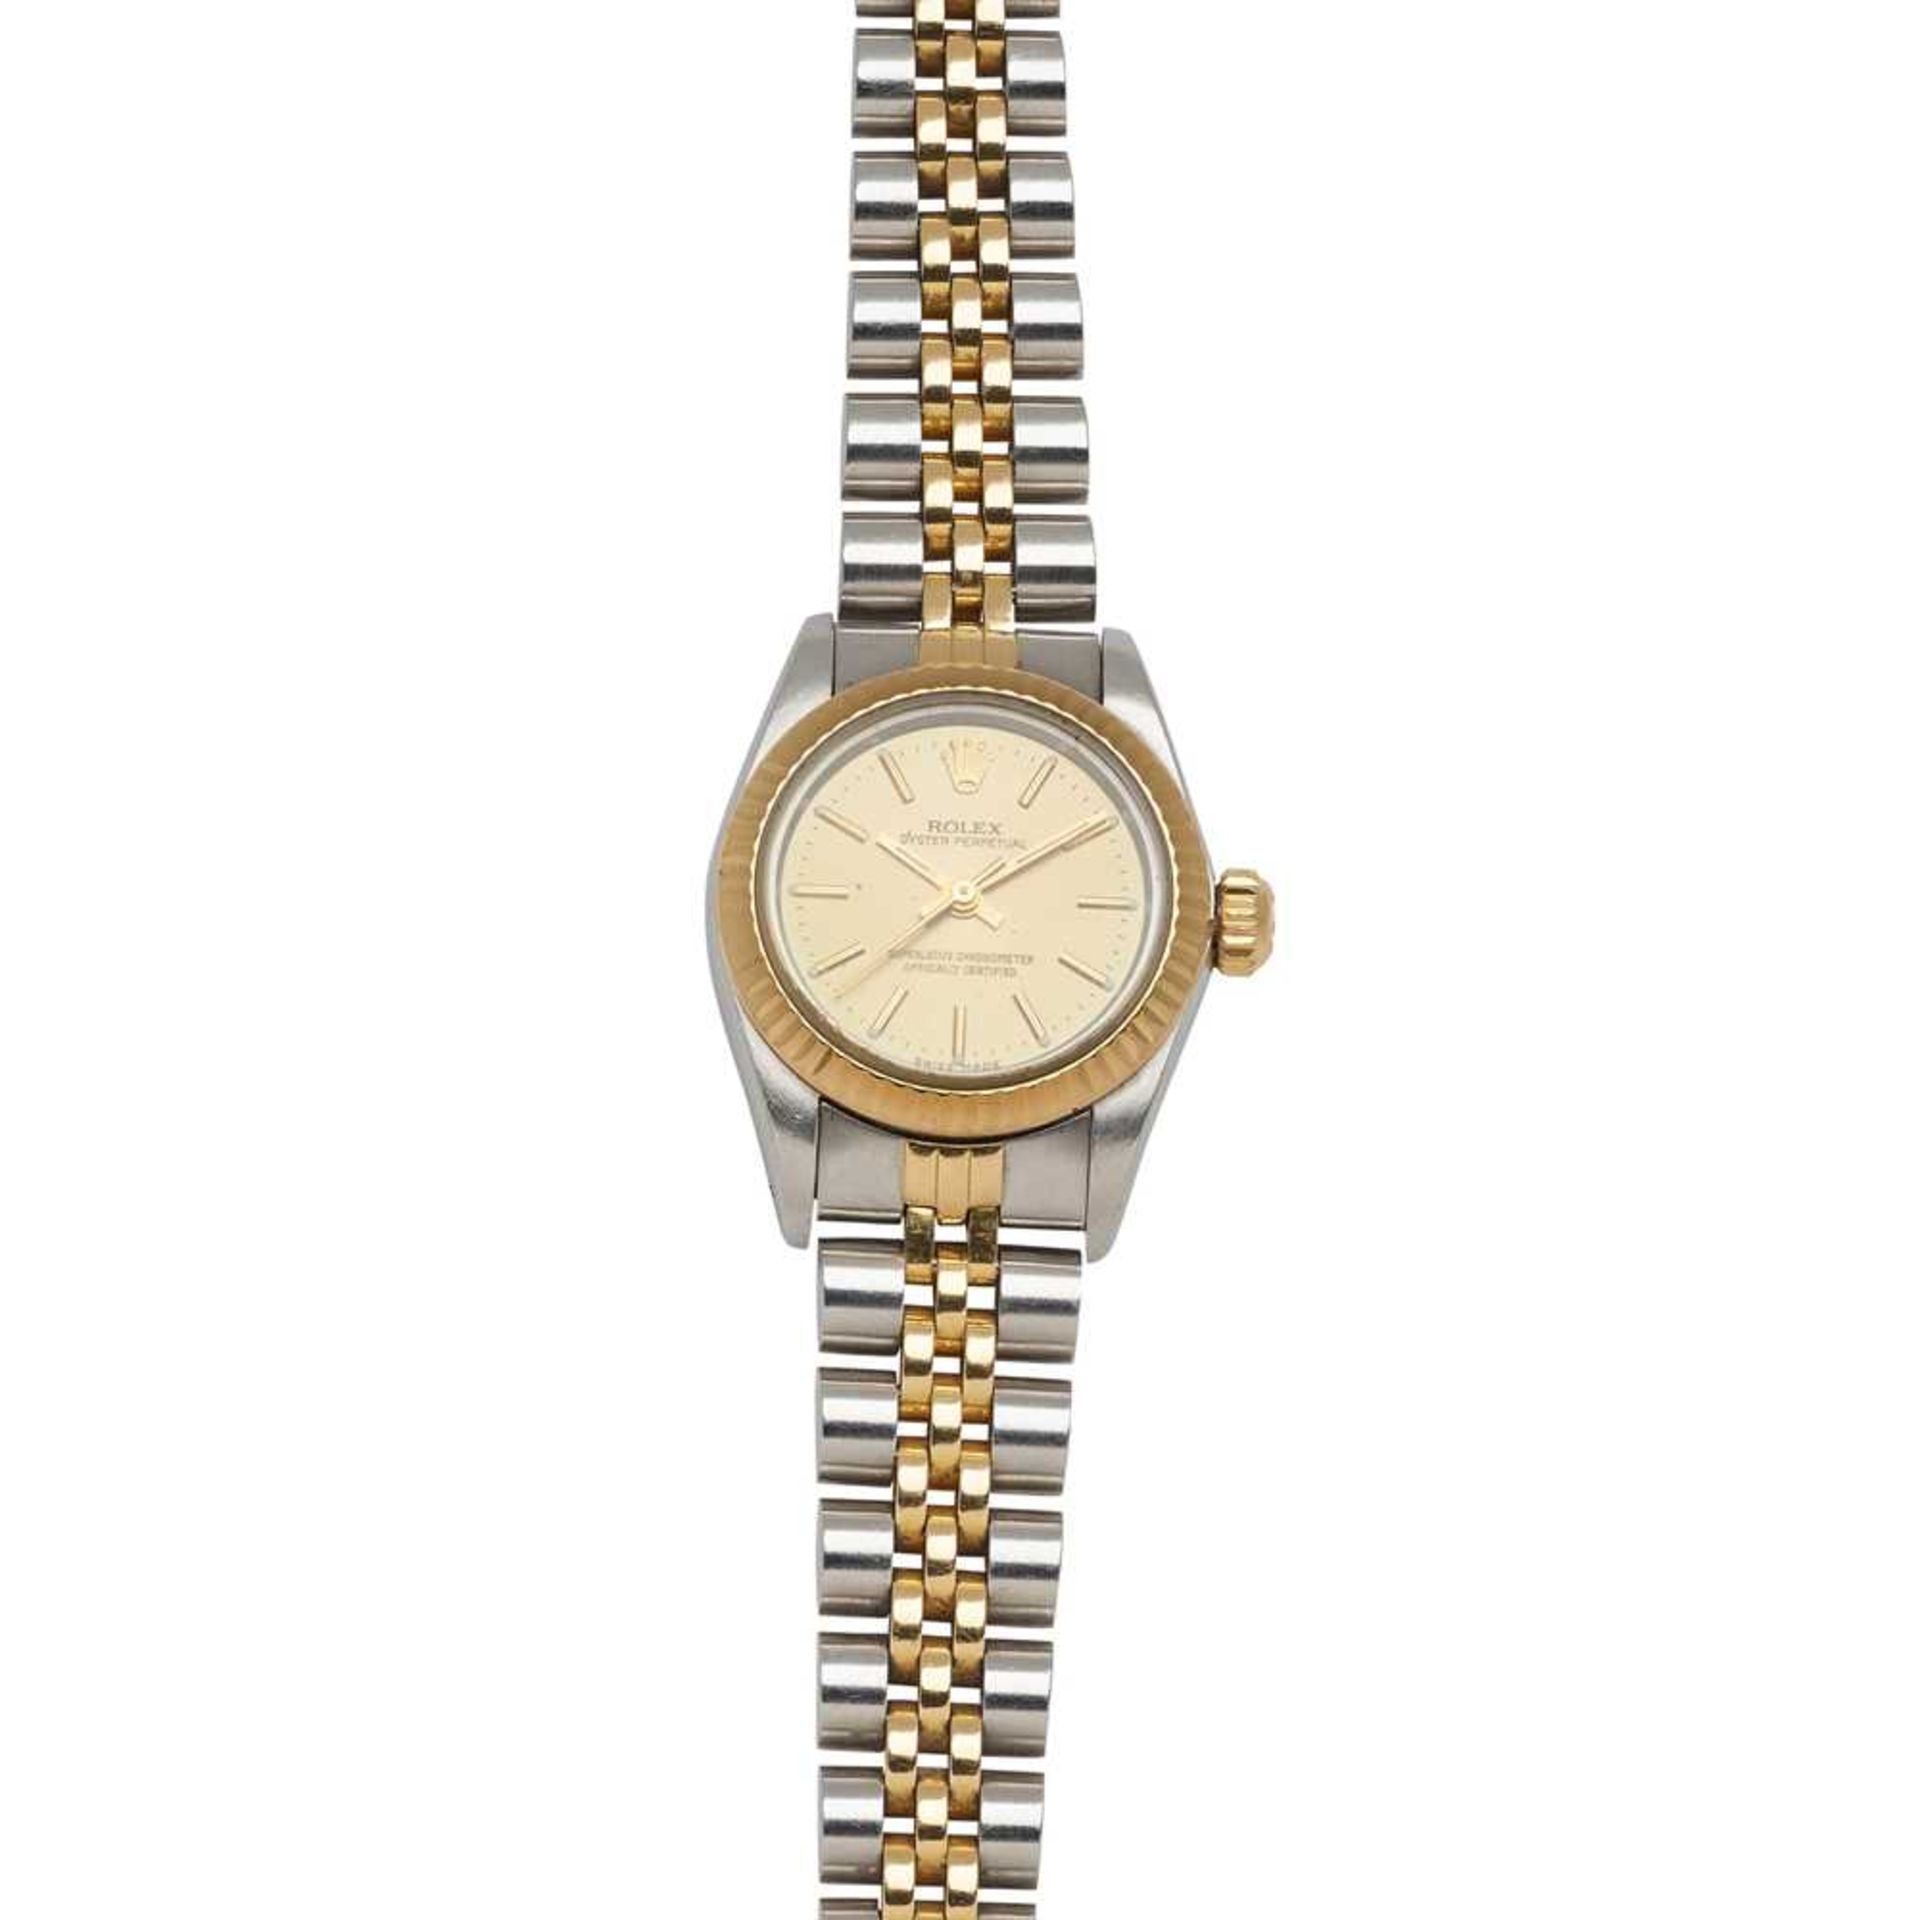 Rolex: a stainless steel bi-colour wrist watch